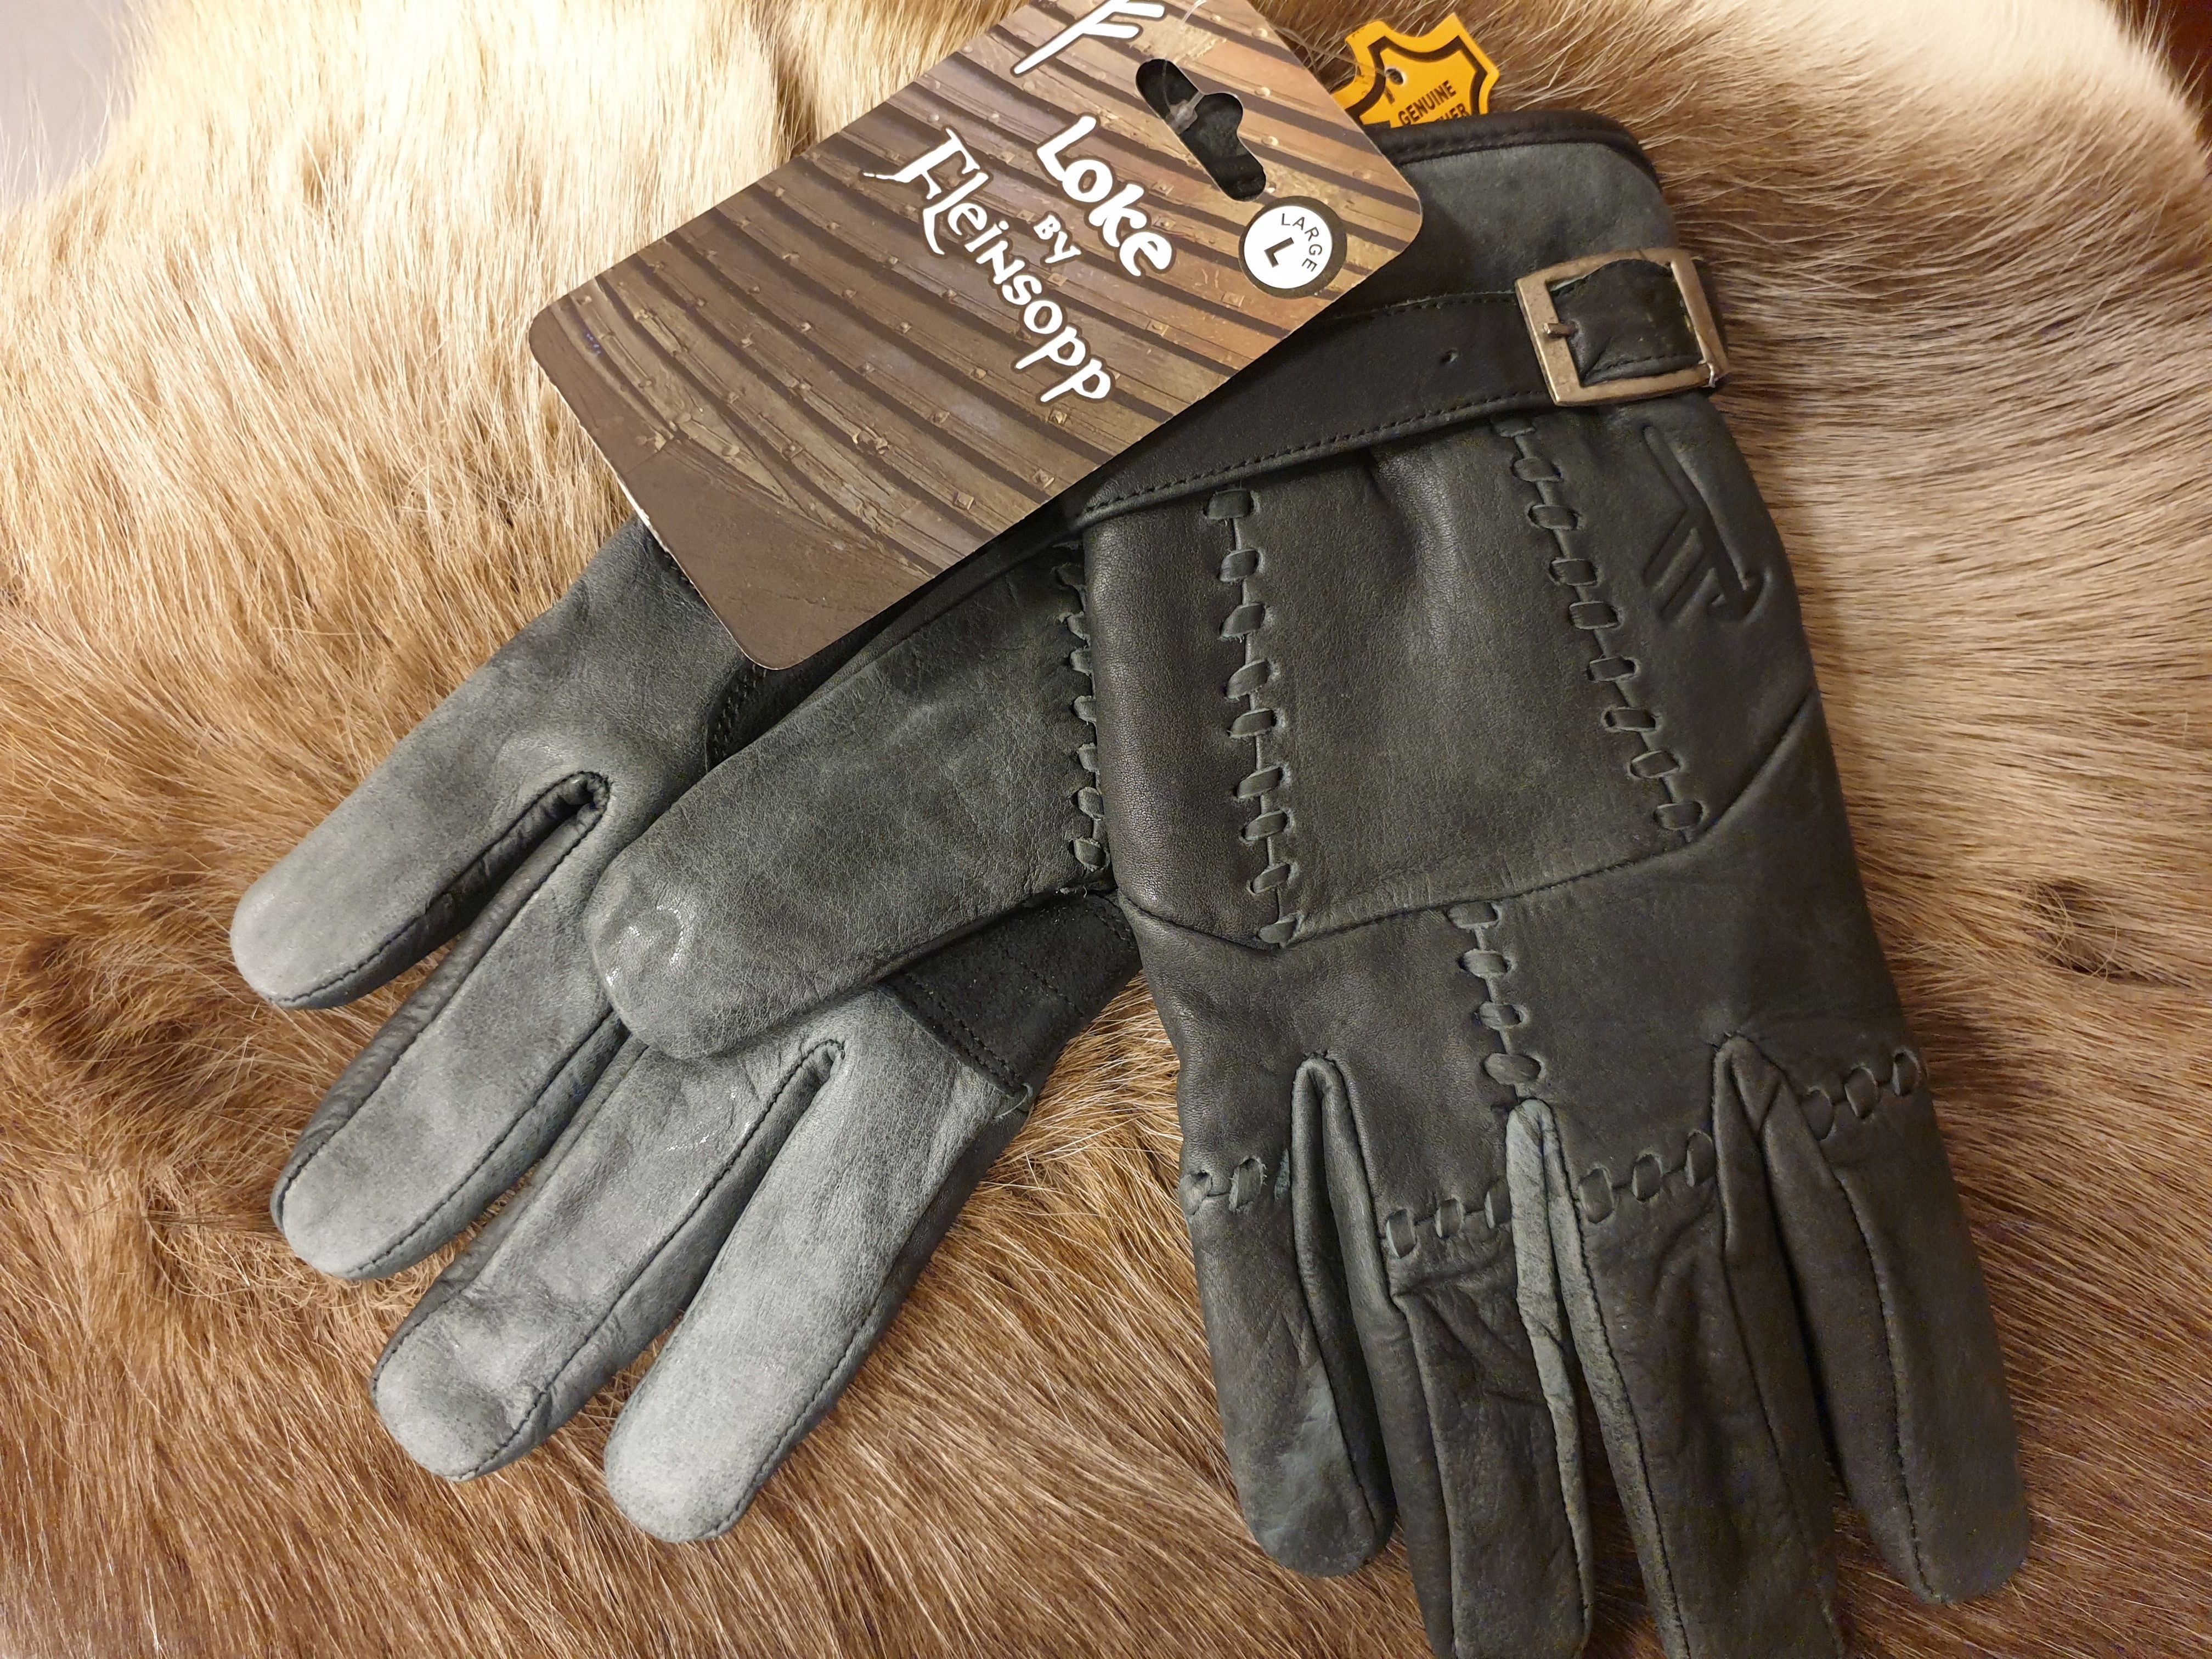 Loke leather glove